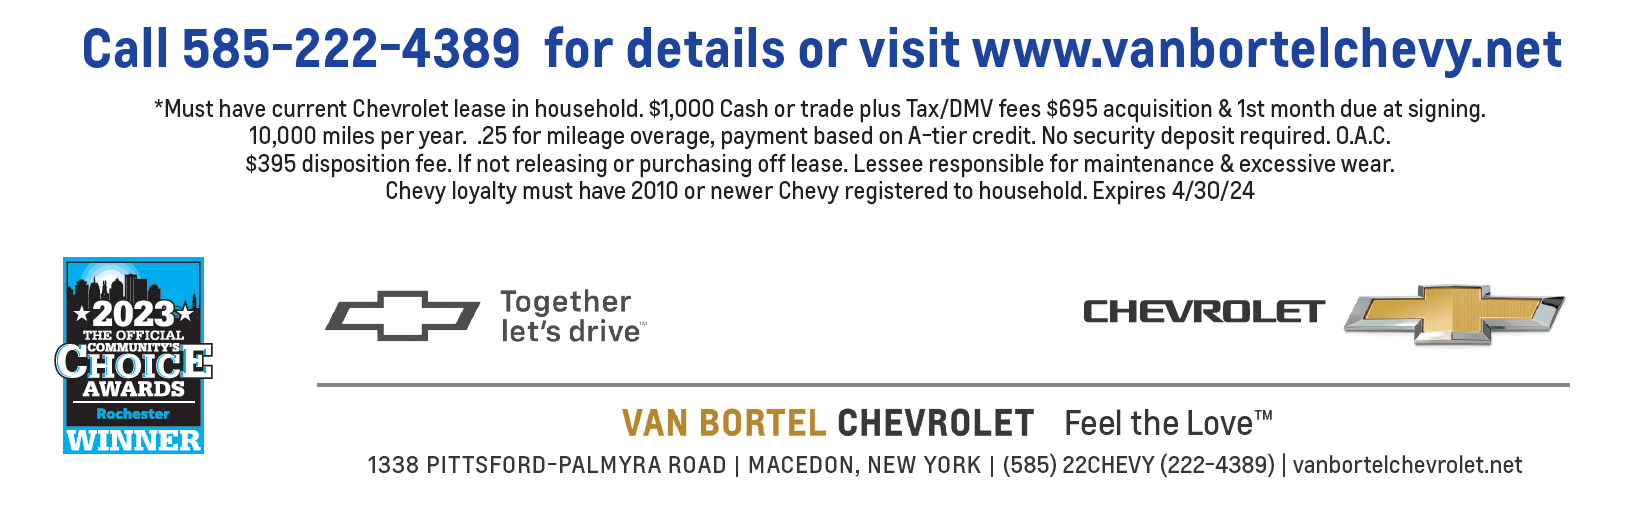 Van Bortel Chevrolet, Inc. in MACEDON NY